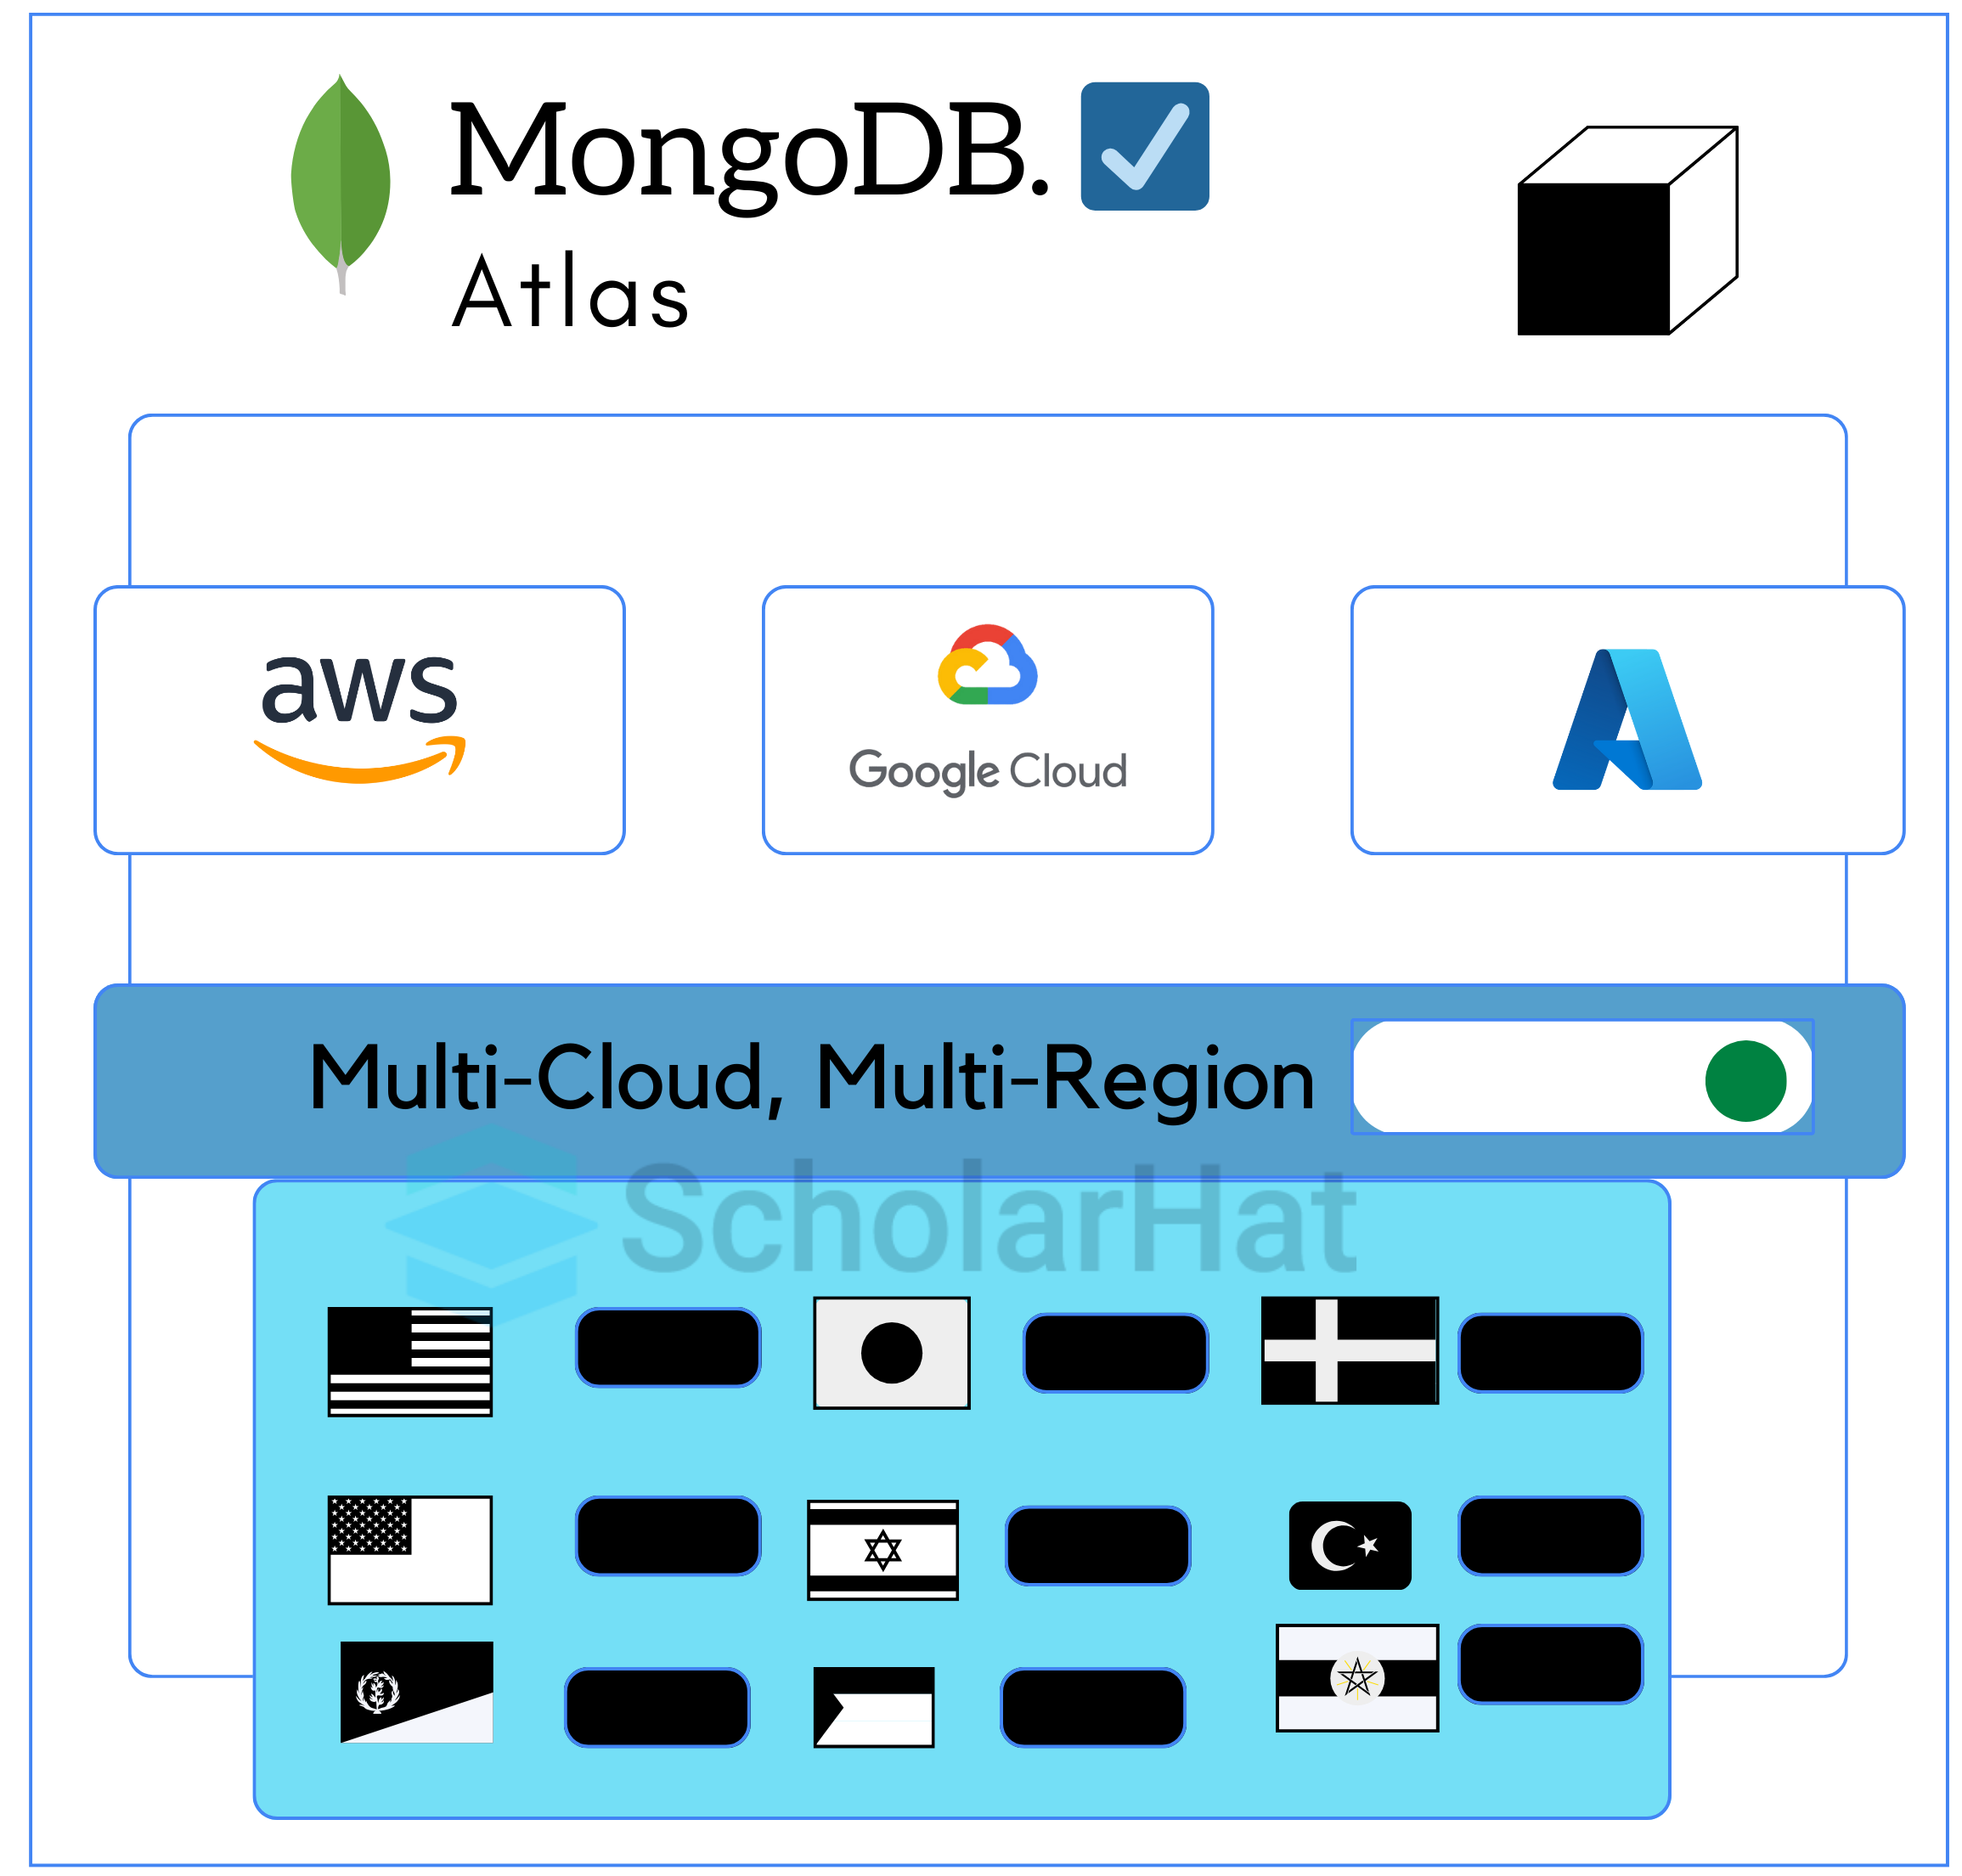 What is MongoDB Atlas?